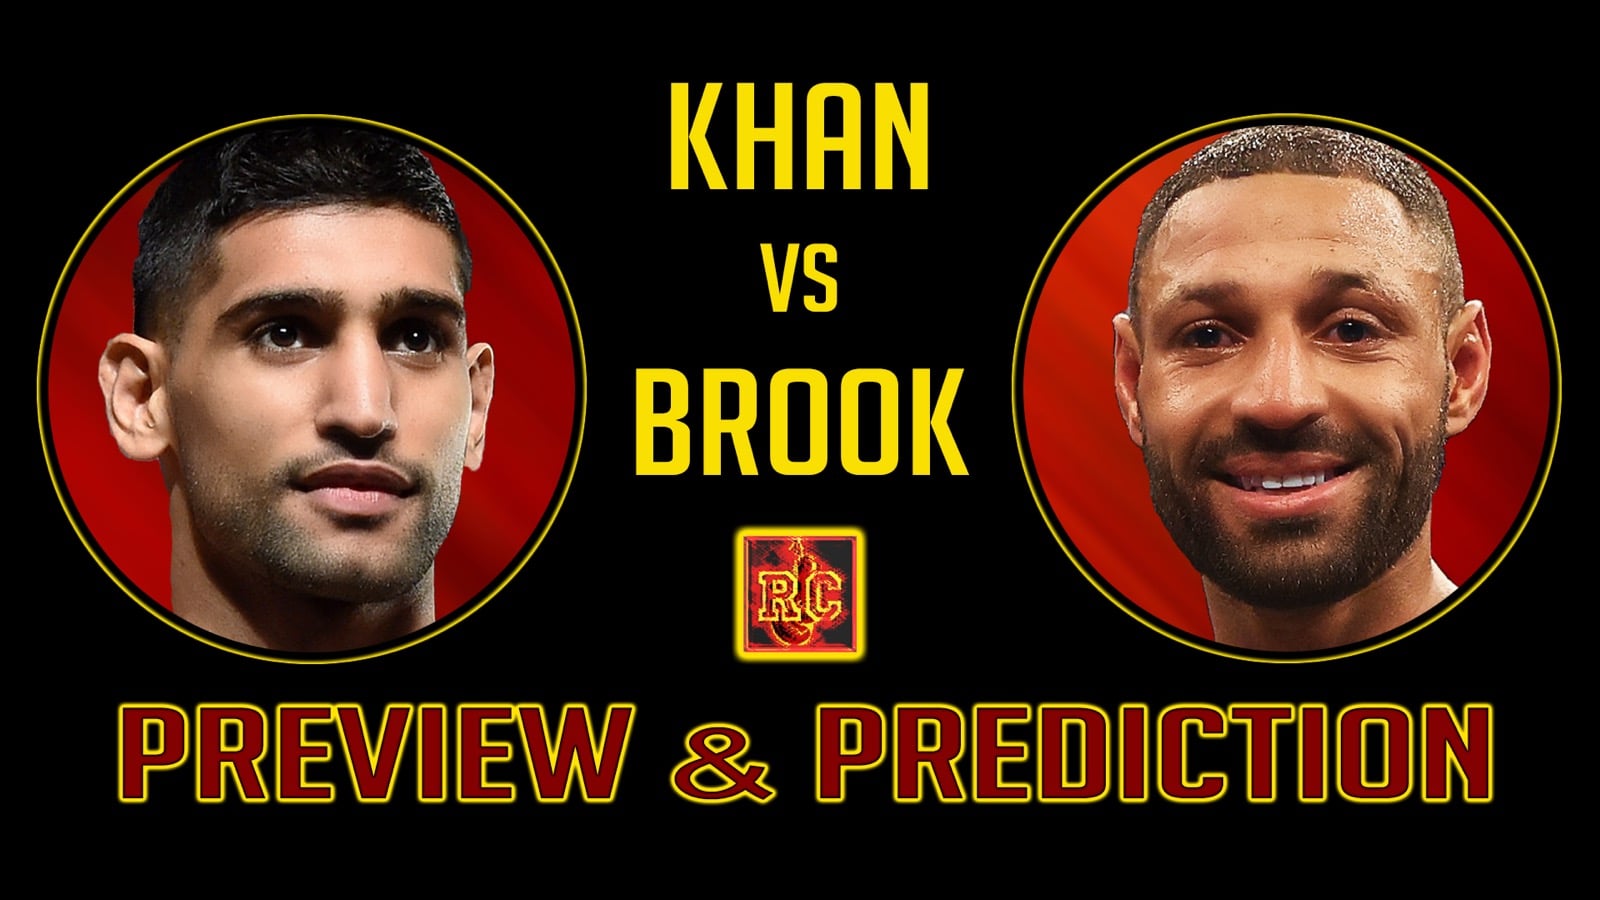 Image: VIDEO: Amir Khan vs Kell Brook - Preview & Prediction